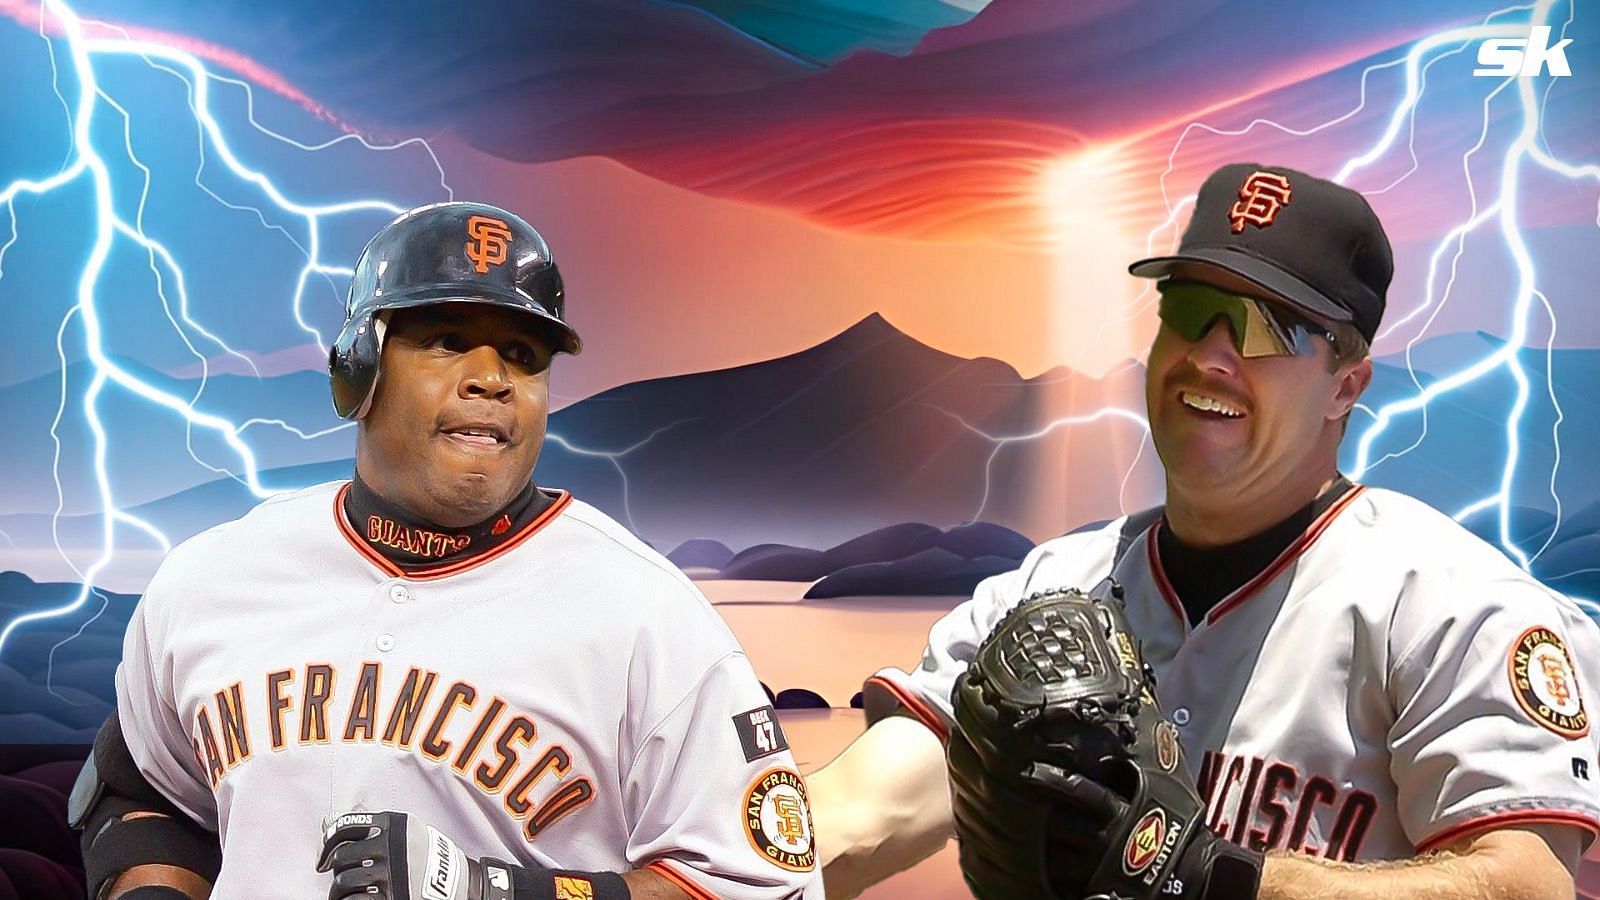 Barry Bonds San Francisco Giants Home Run Shirt - High-Quality